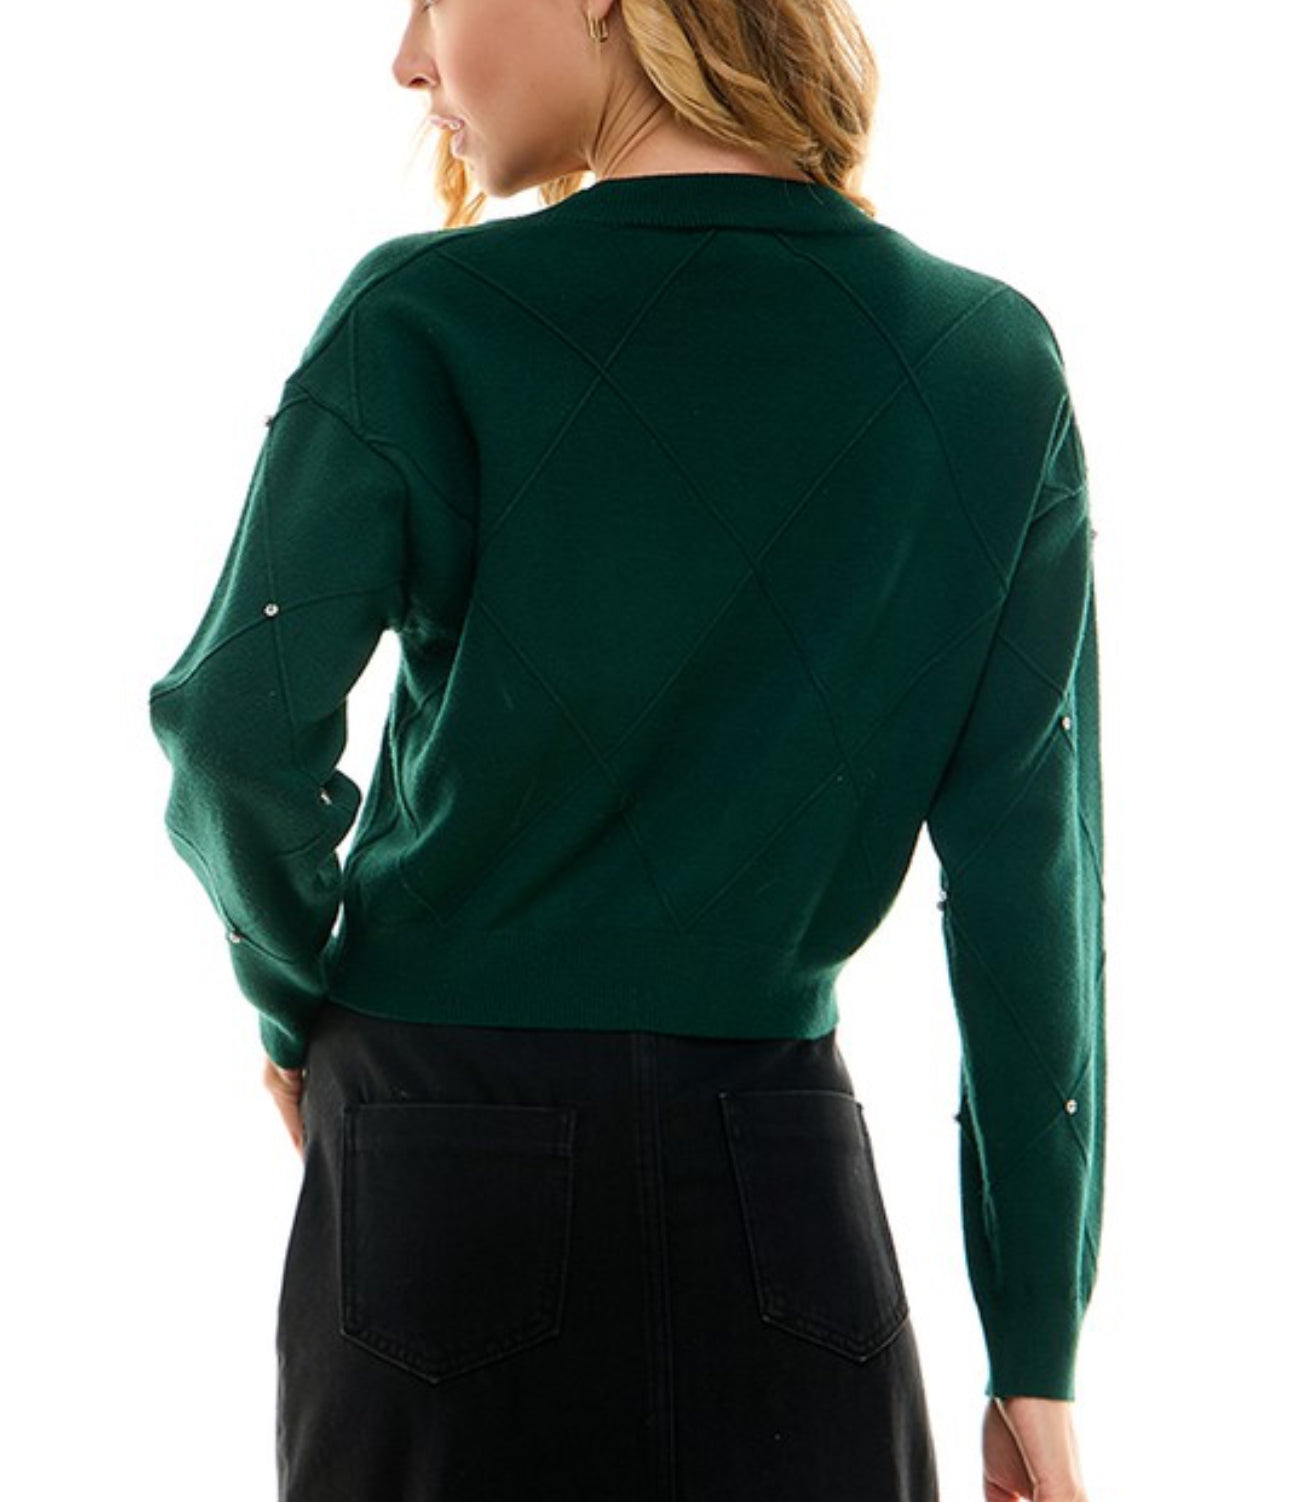 Jewel button up sweater (hunter green)